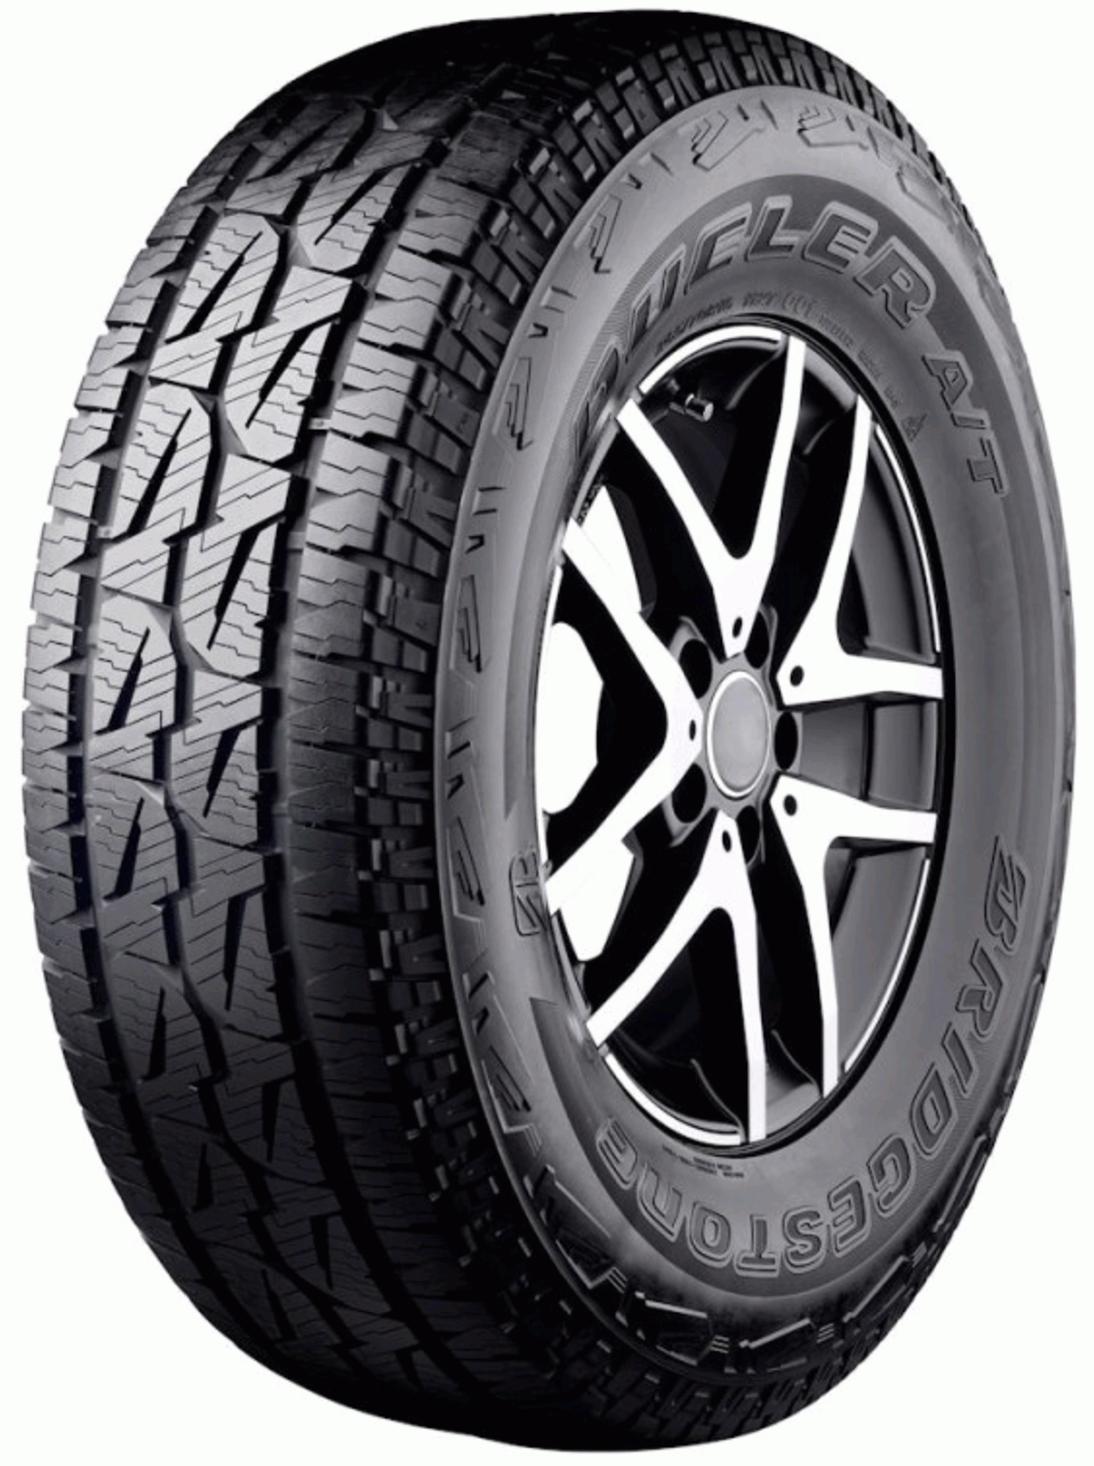 Bridgestone Dueler AT 001 - Tire Reviews and Tests